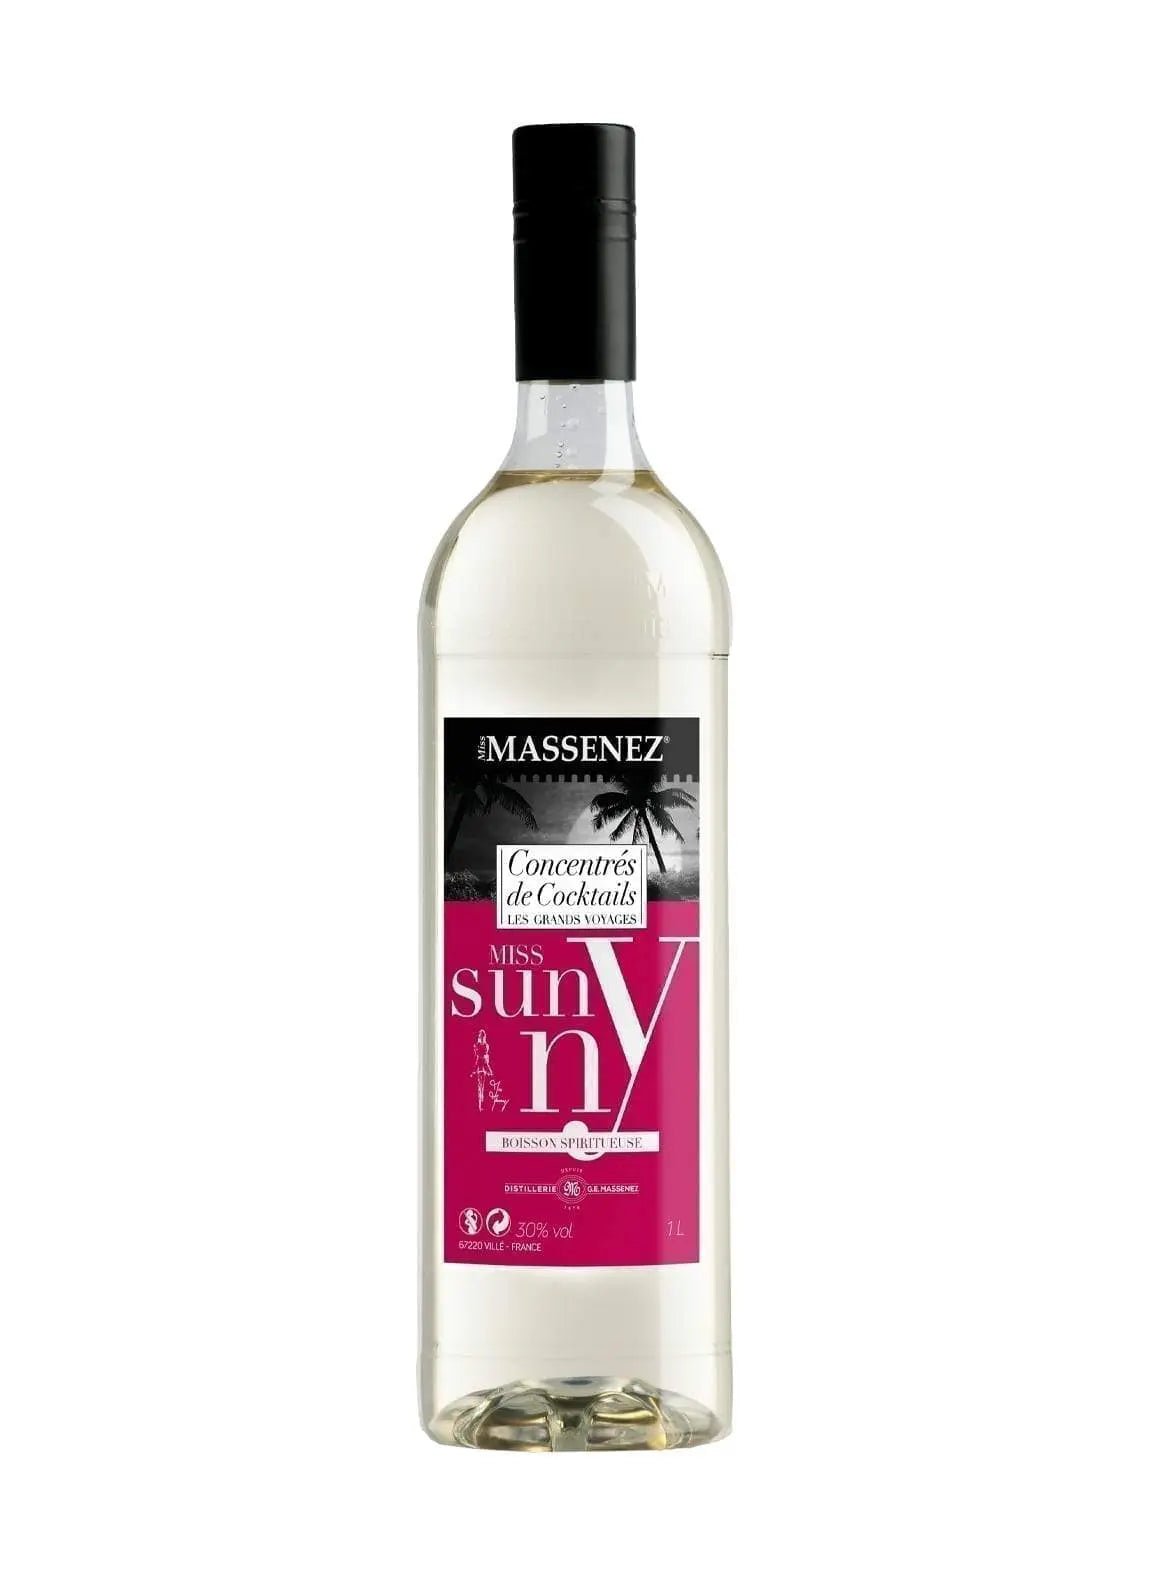 Massenez Cocktail Concentrate Miss Sunny (Vodka, Williams' Pear spirit) 30% 1000ml - Liquor & Spirits - Liquor Wine Cave